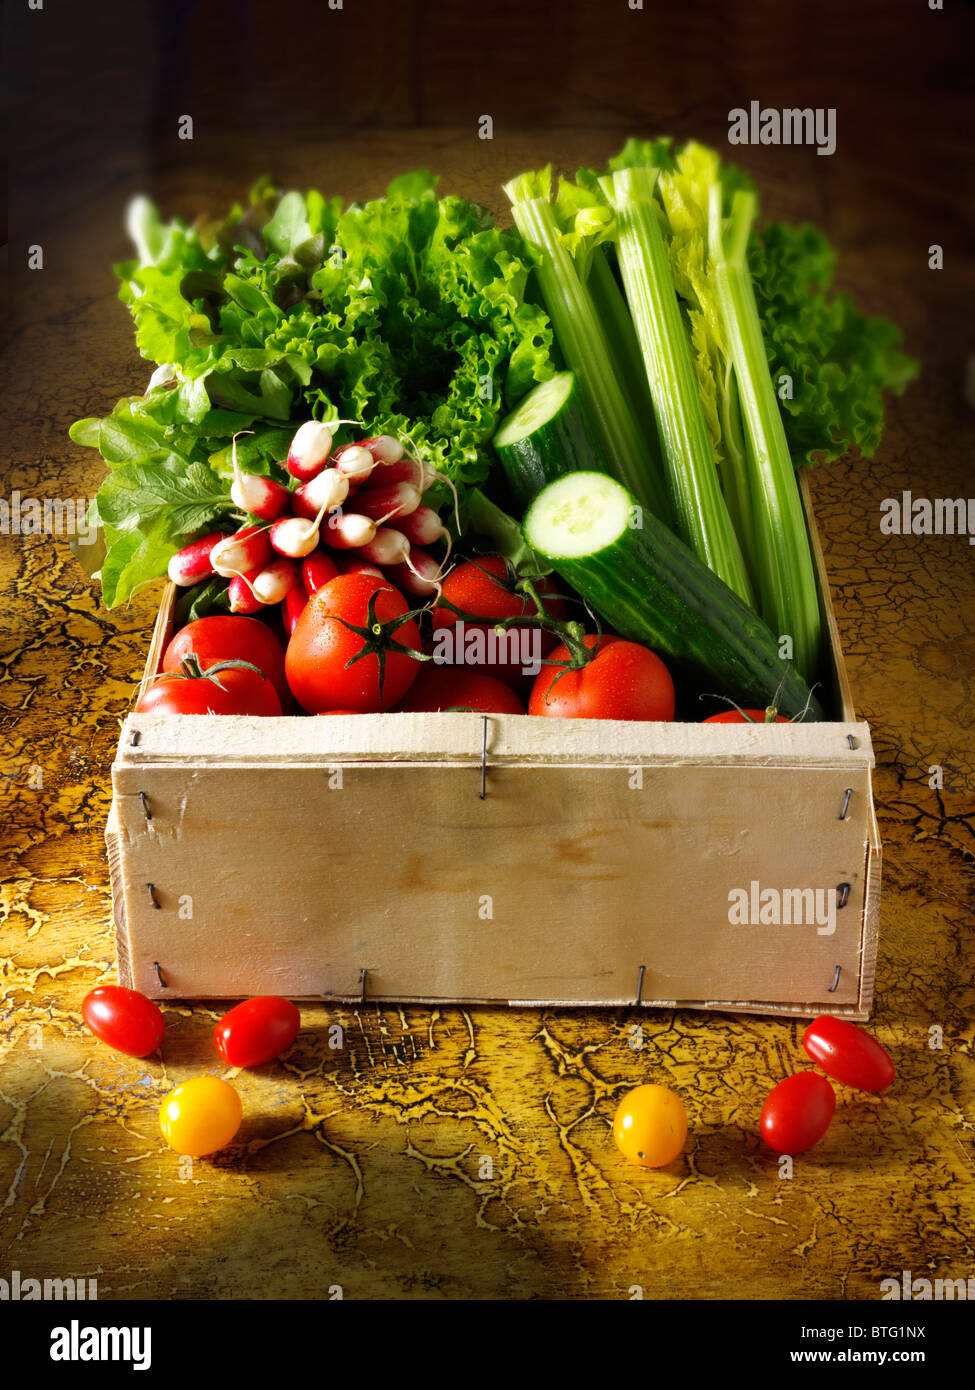 Varias ensaladas, comidas, para consumo inmediato Fotografía de stock -  Alamy